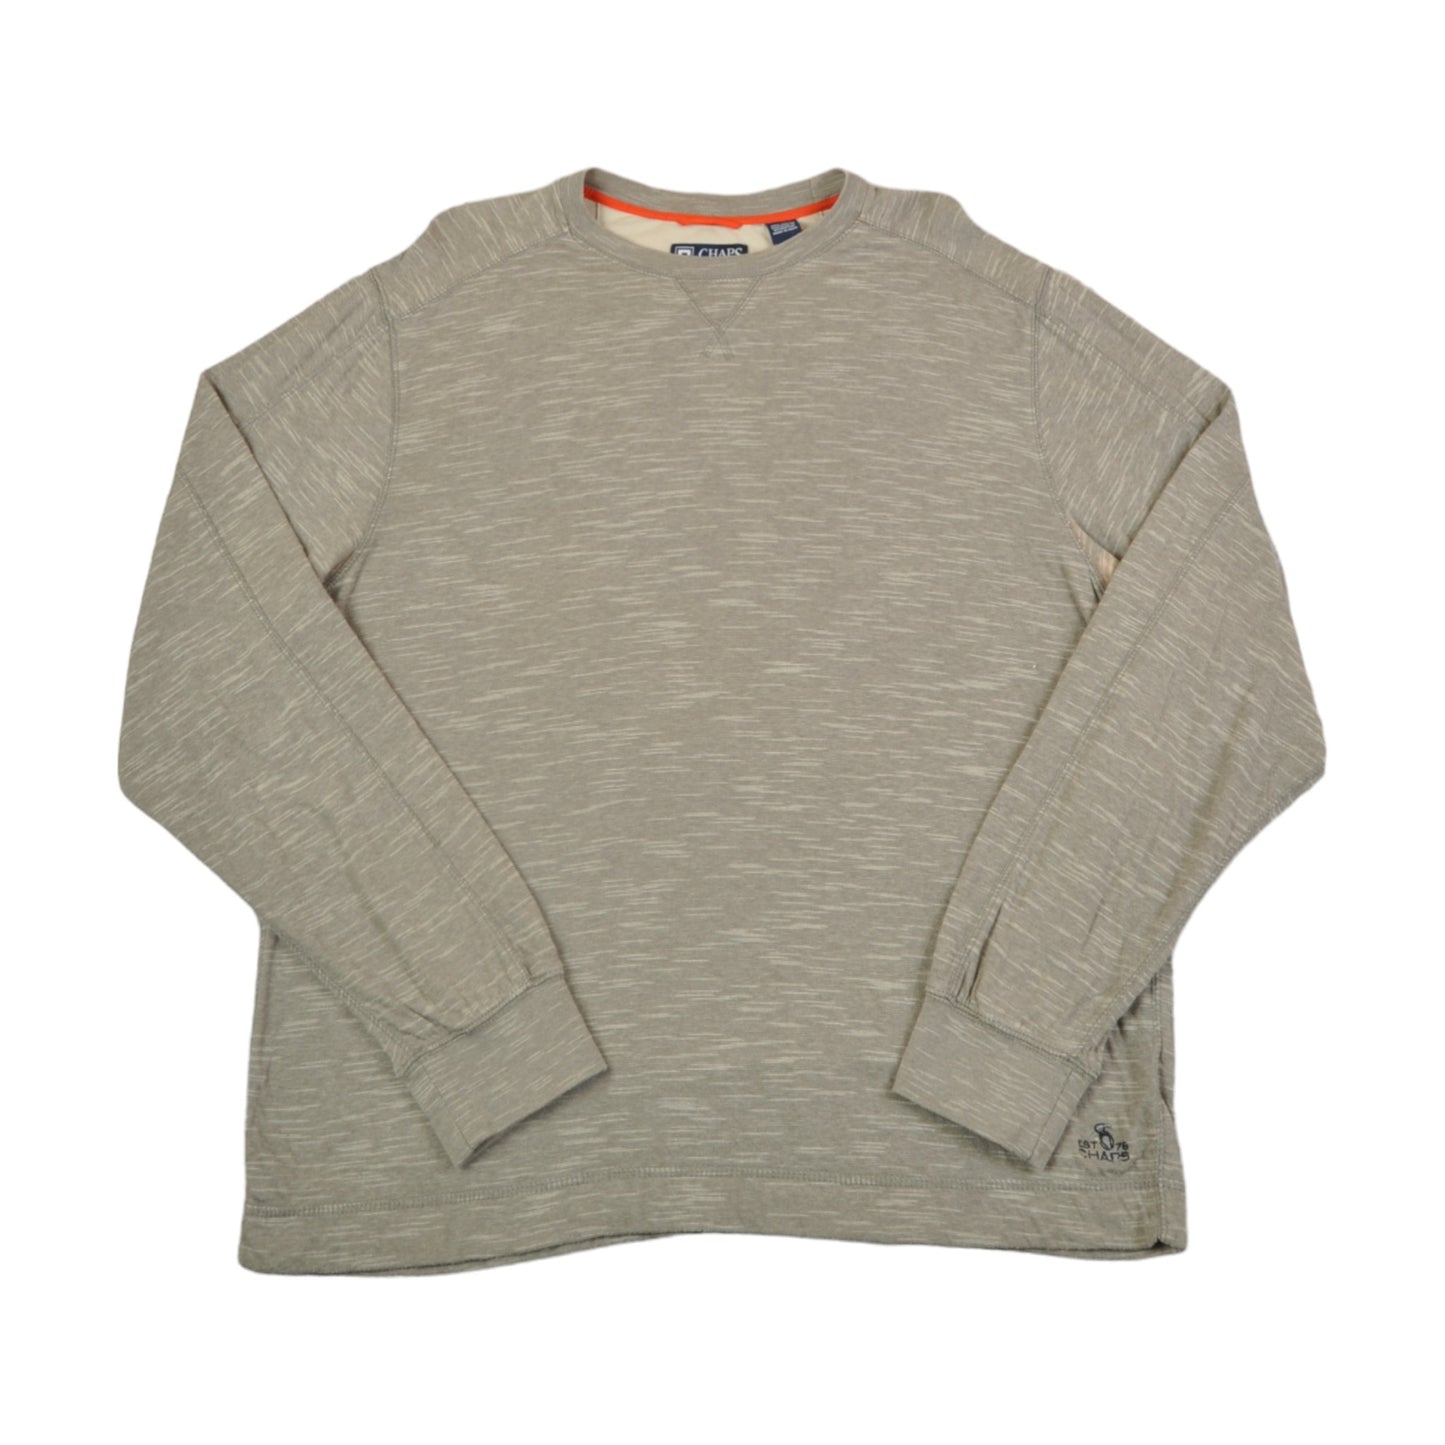 Vintage Chaps Crew Neck Sweatshirt Grey XL